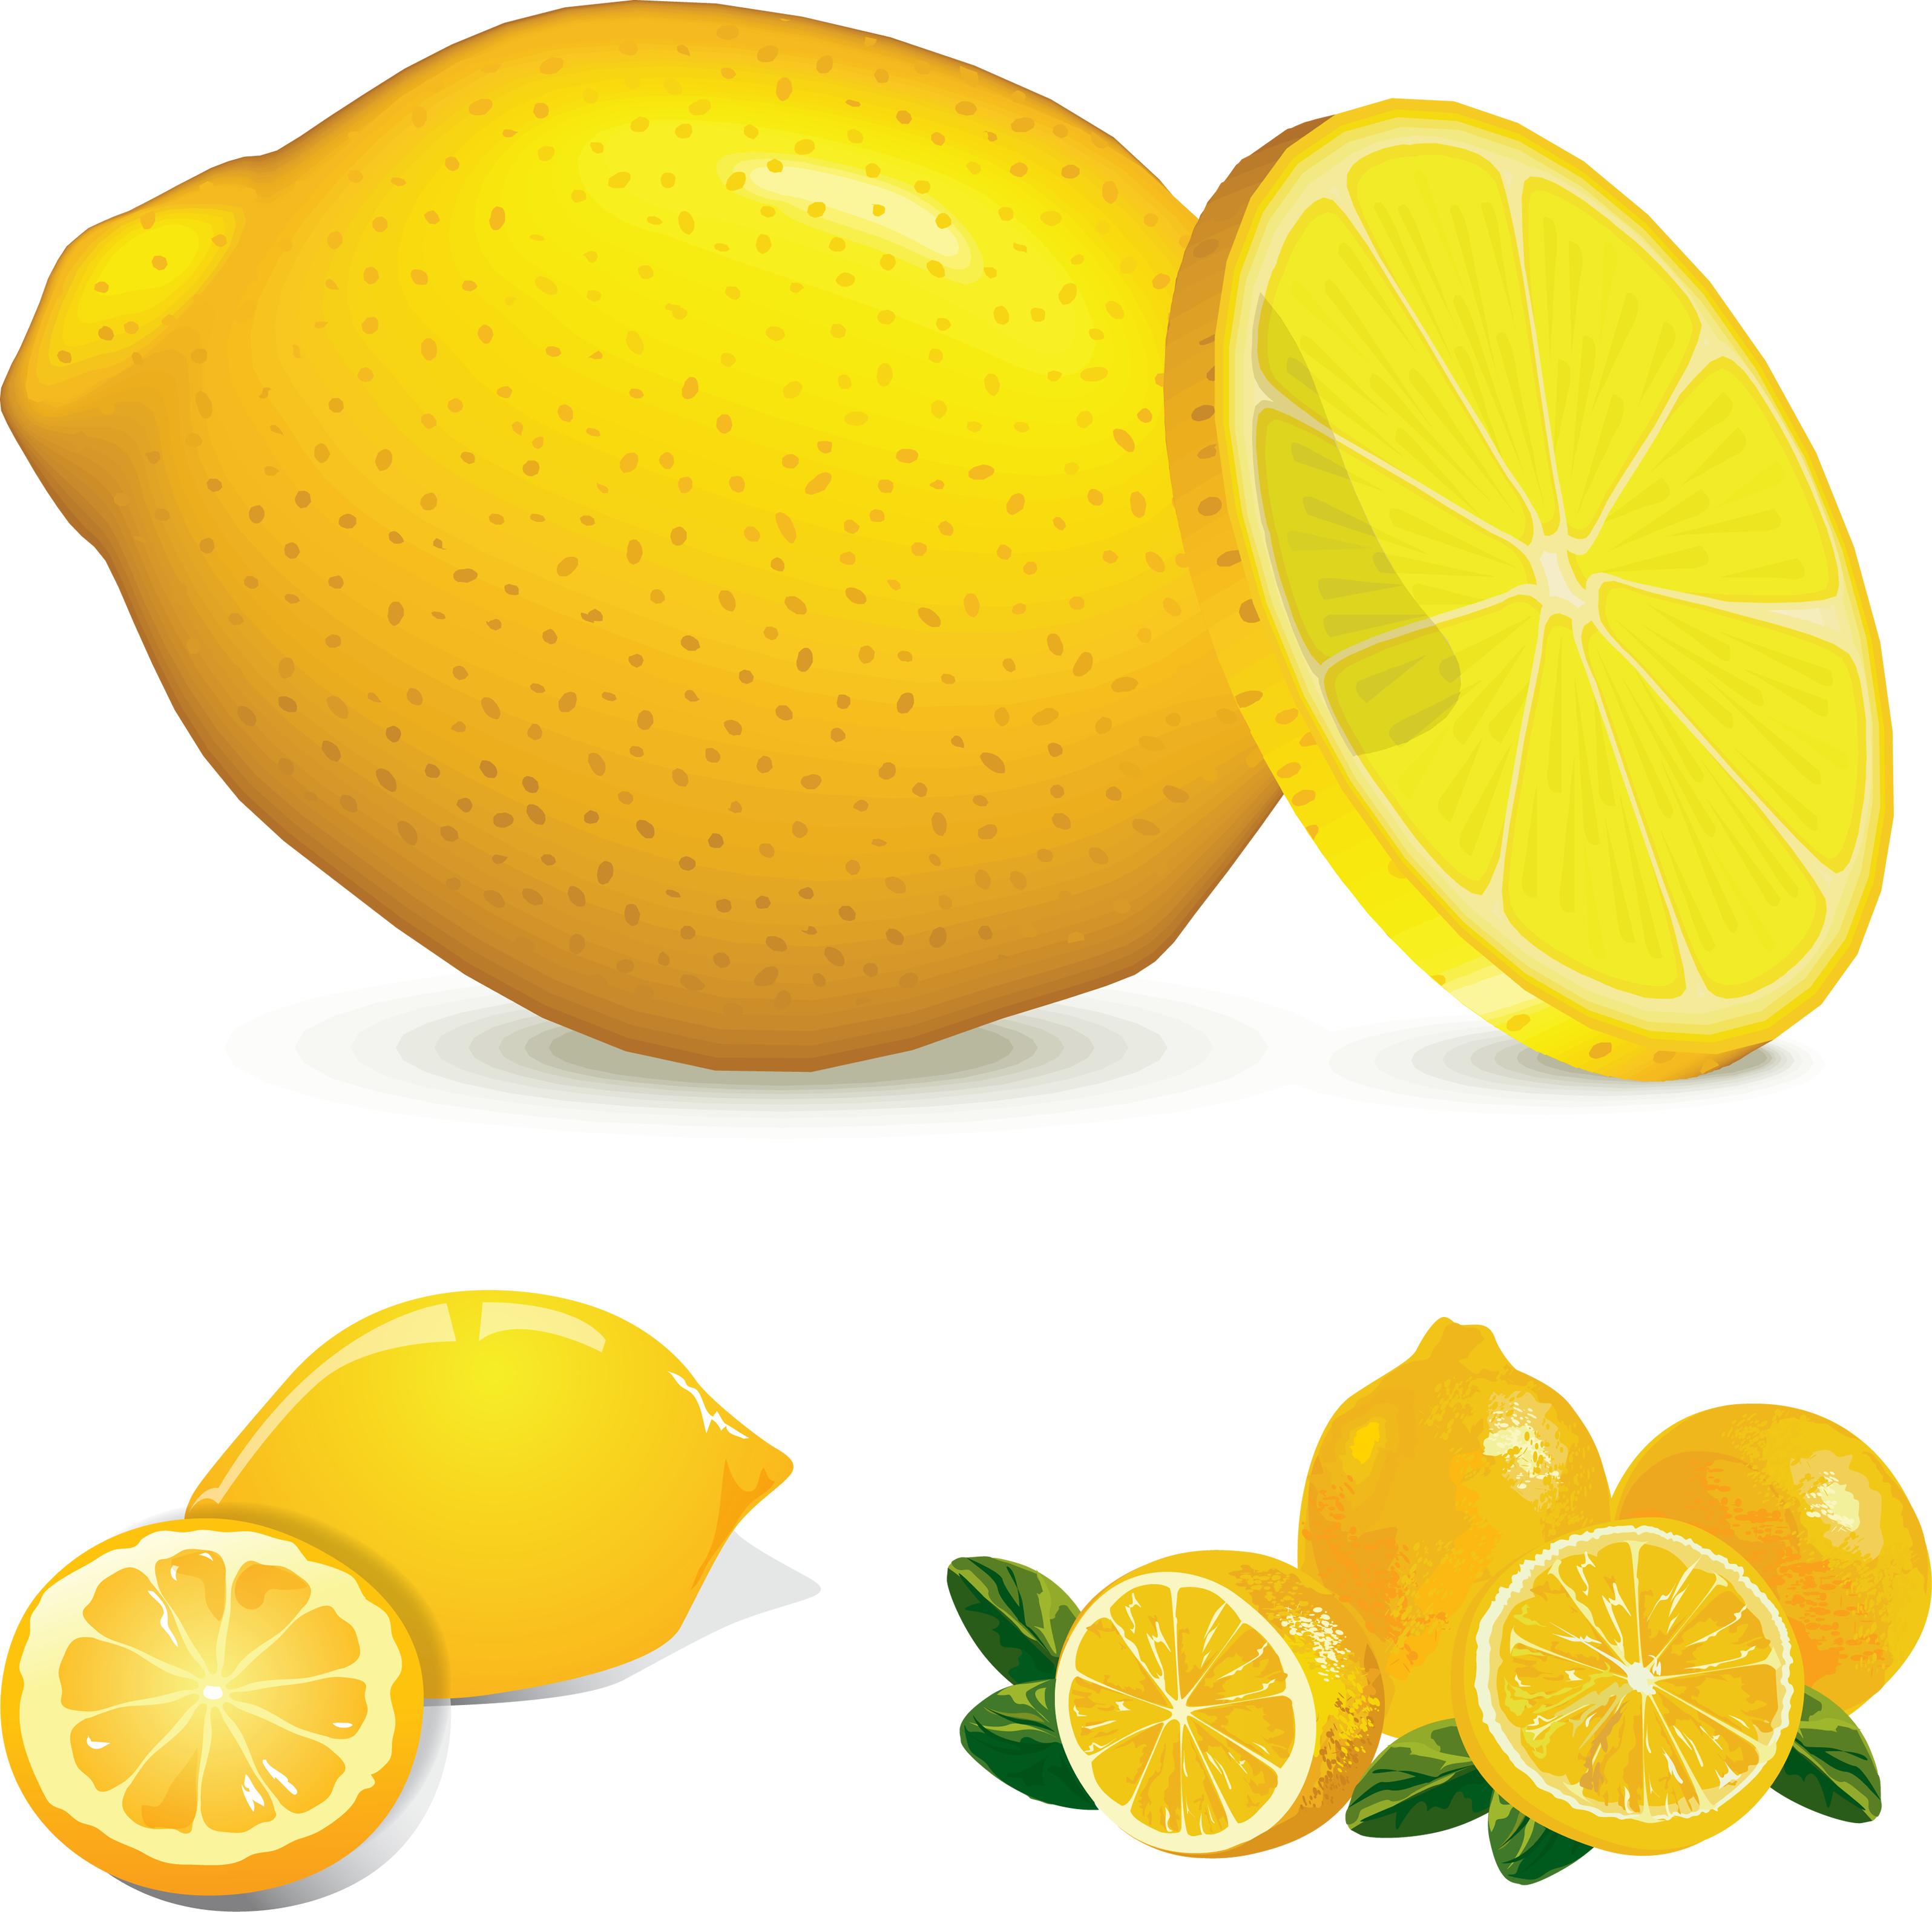 Lemon aid and lemons clipart 2